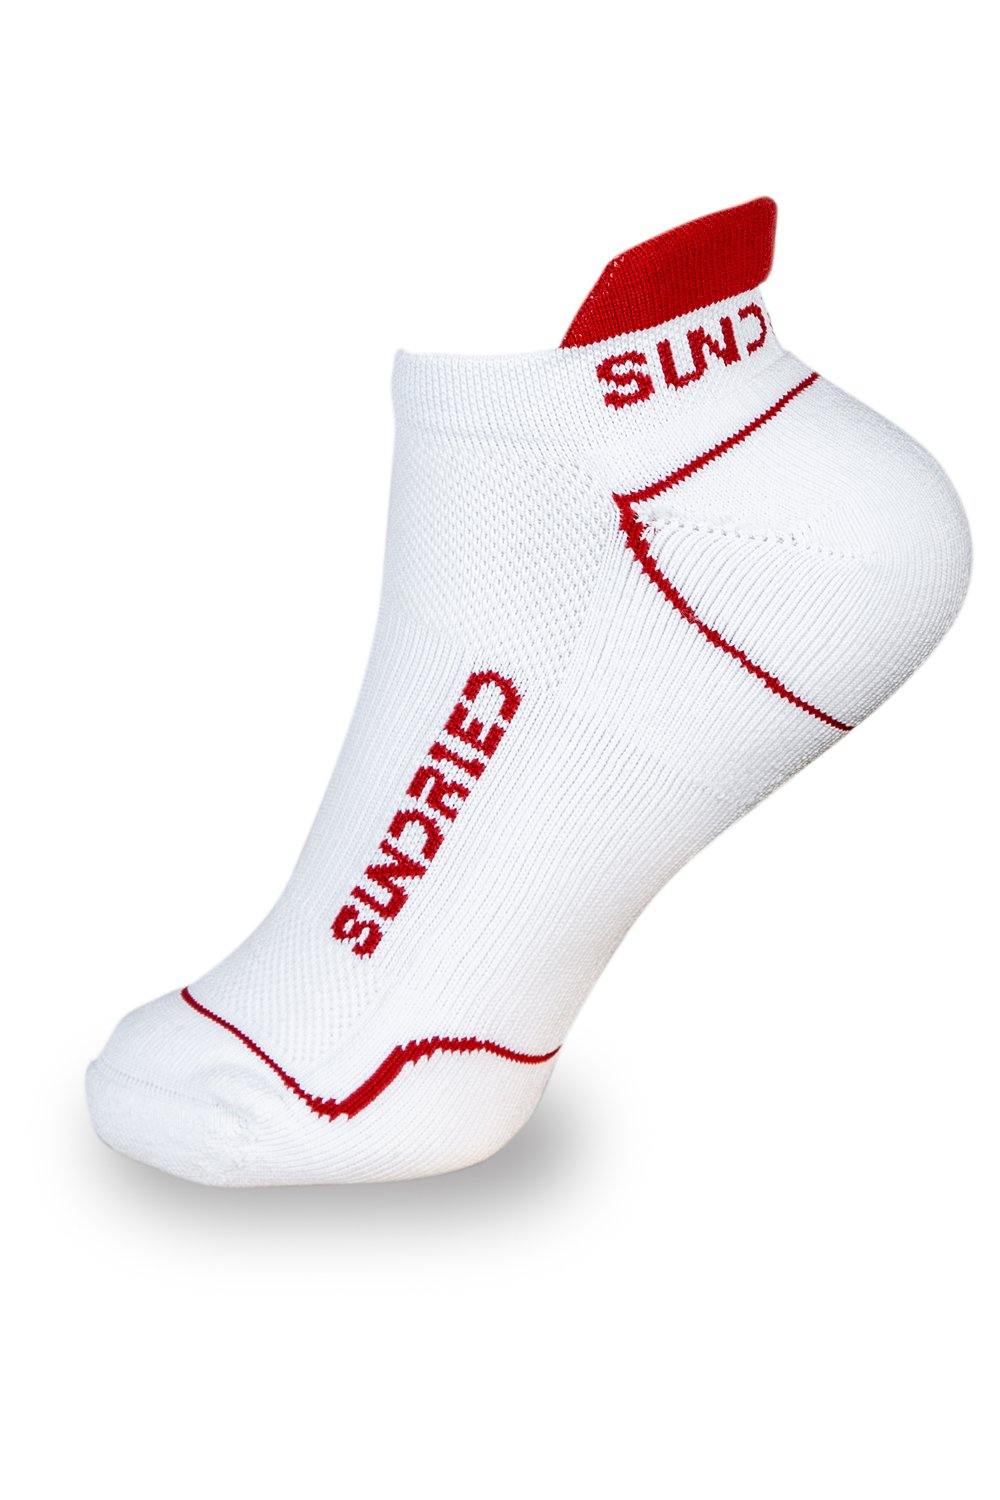 Sundried Recycled Run Socks Running Socks Activewear